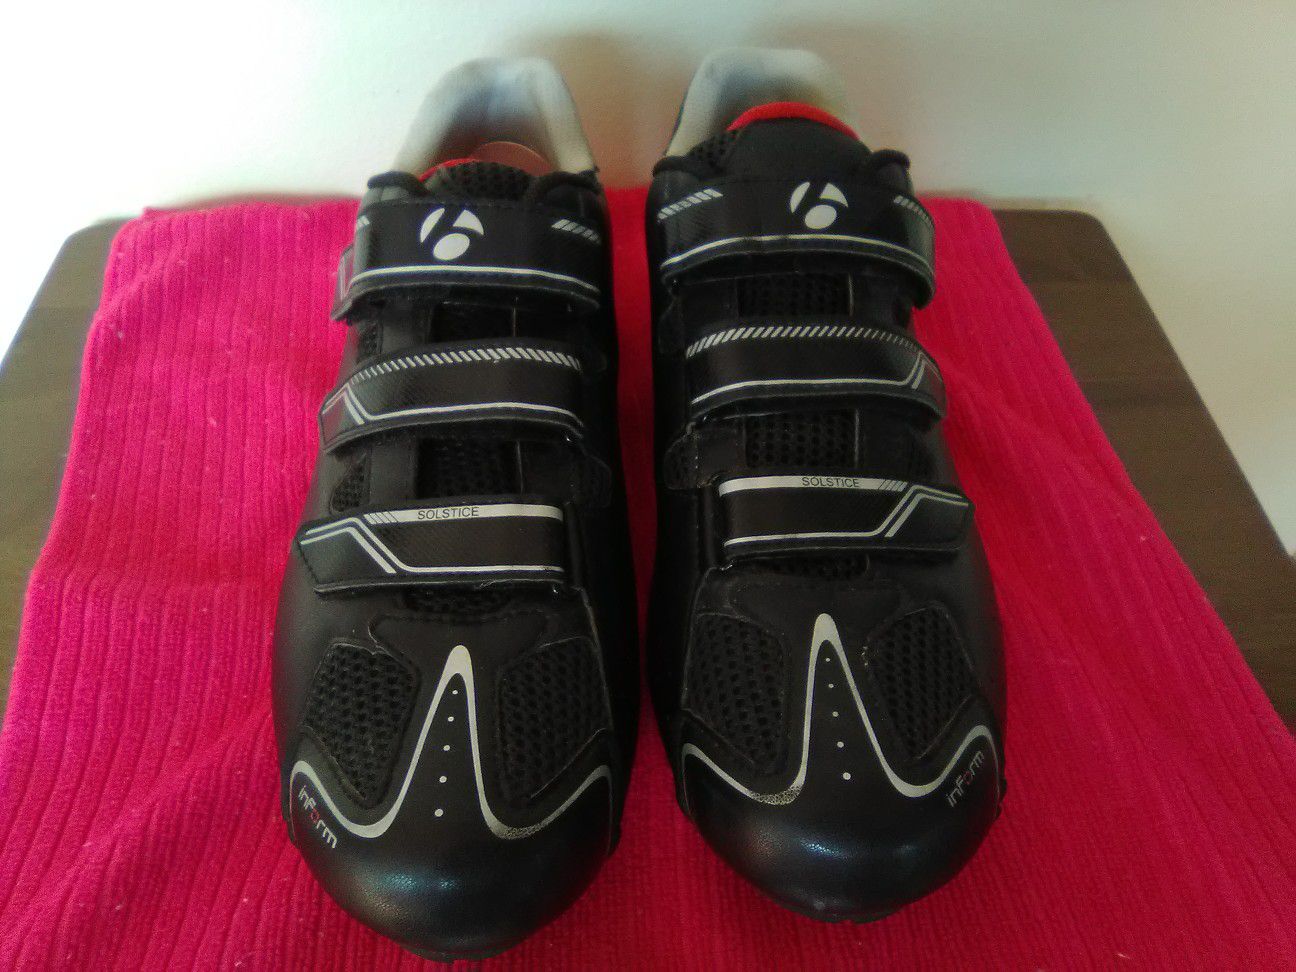 BONTRAGER Inform Solstice Unisex Road Cycling Shoes Size 13